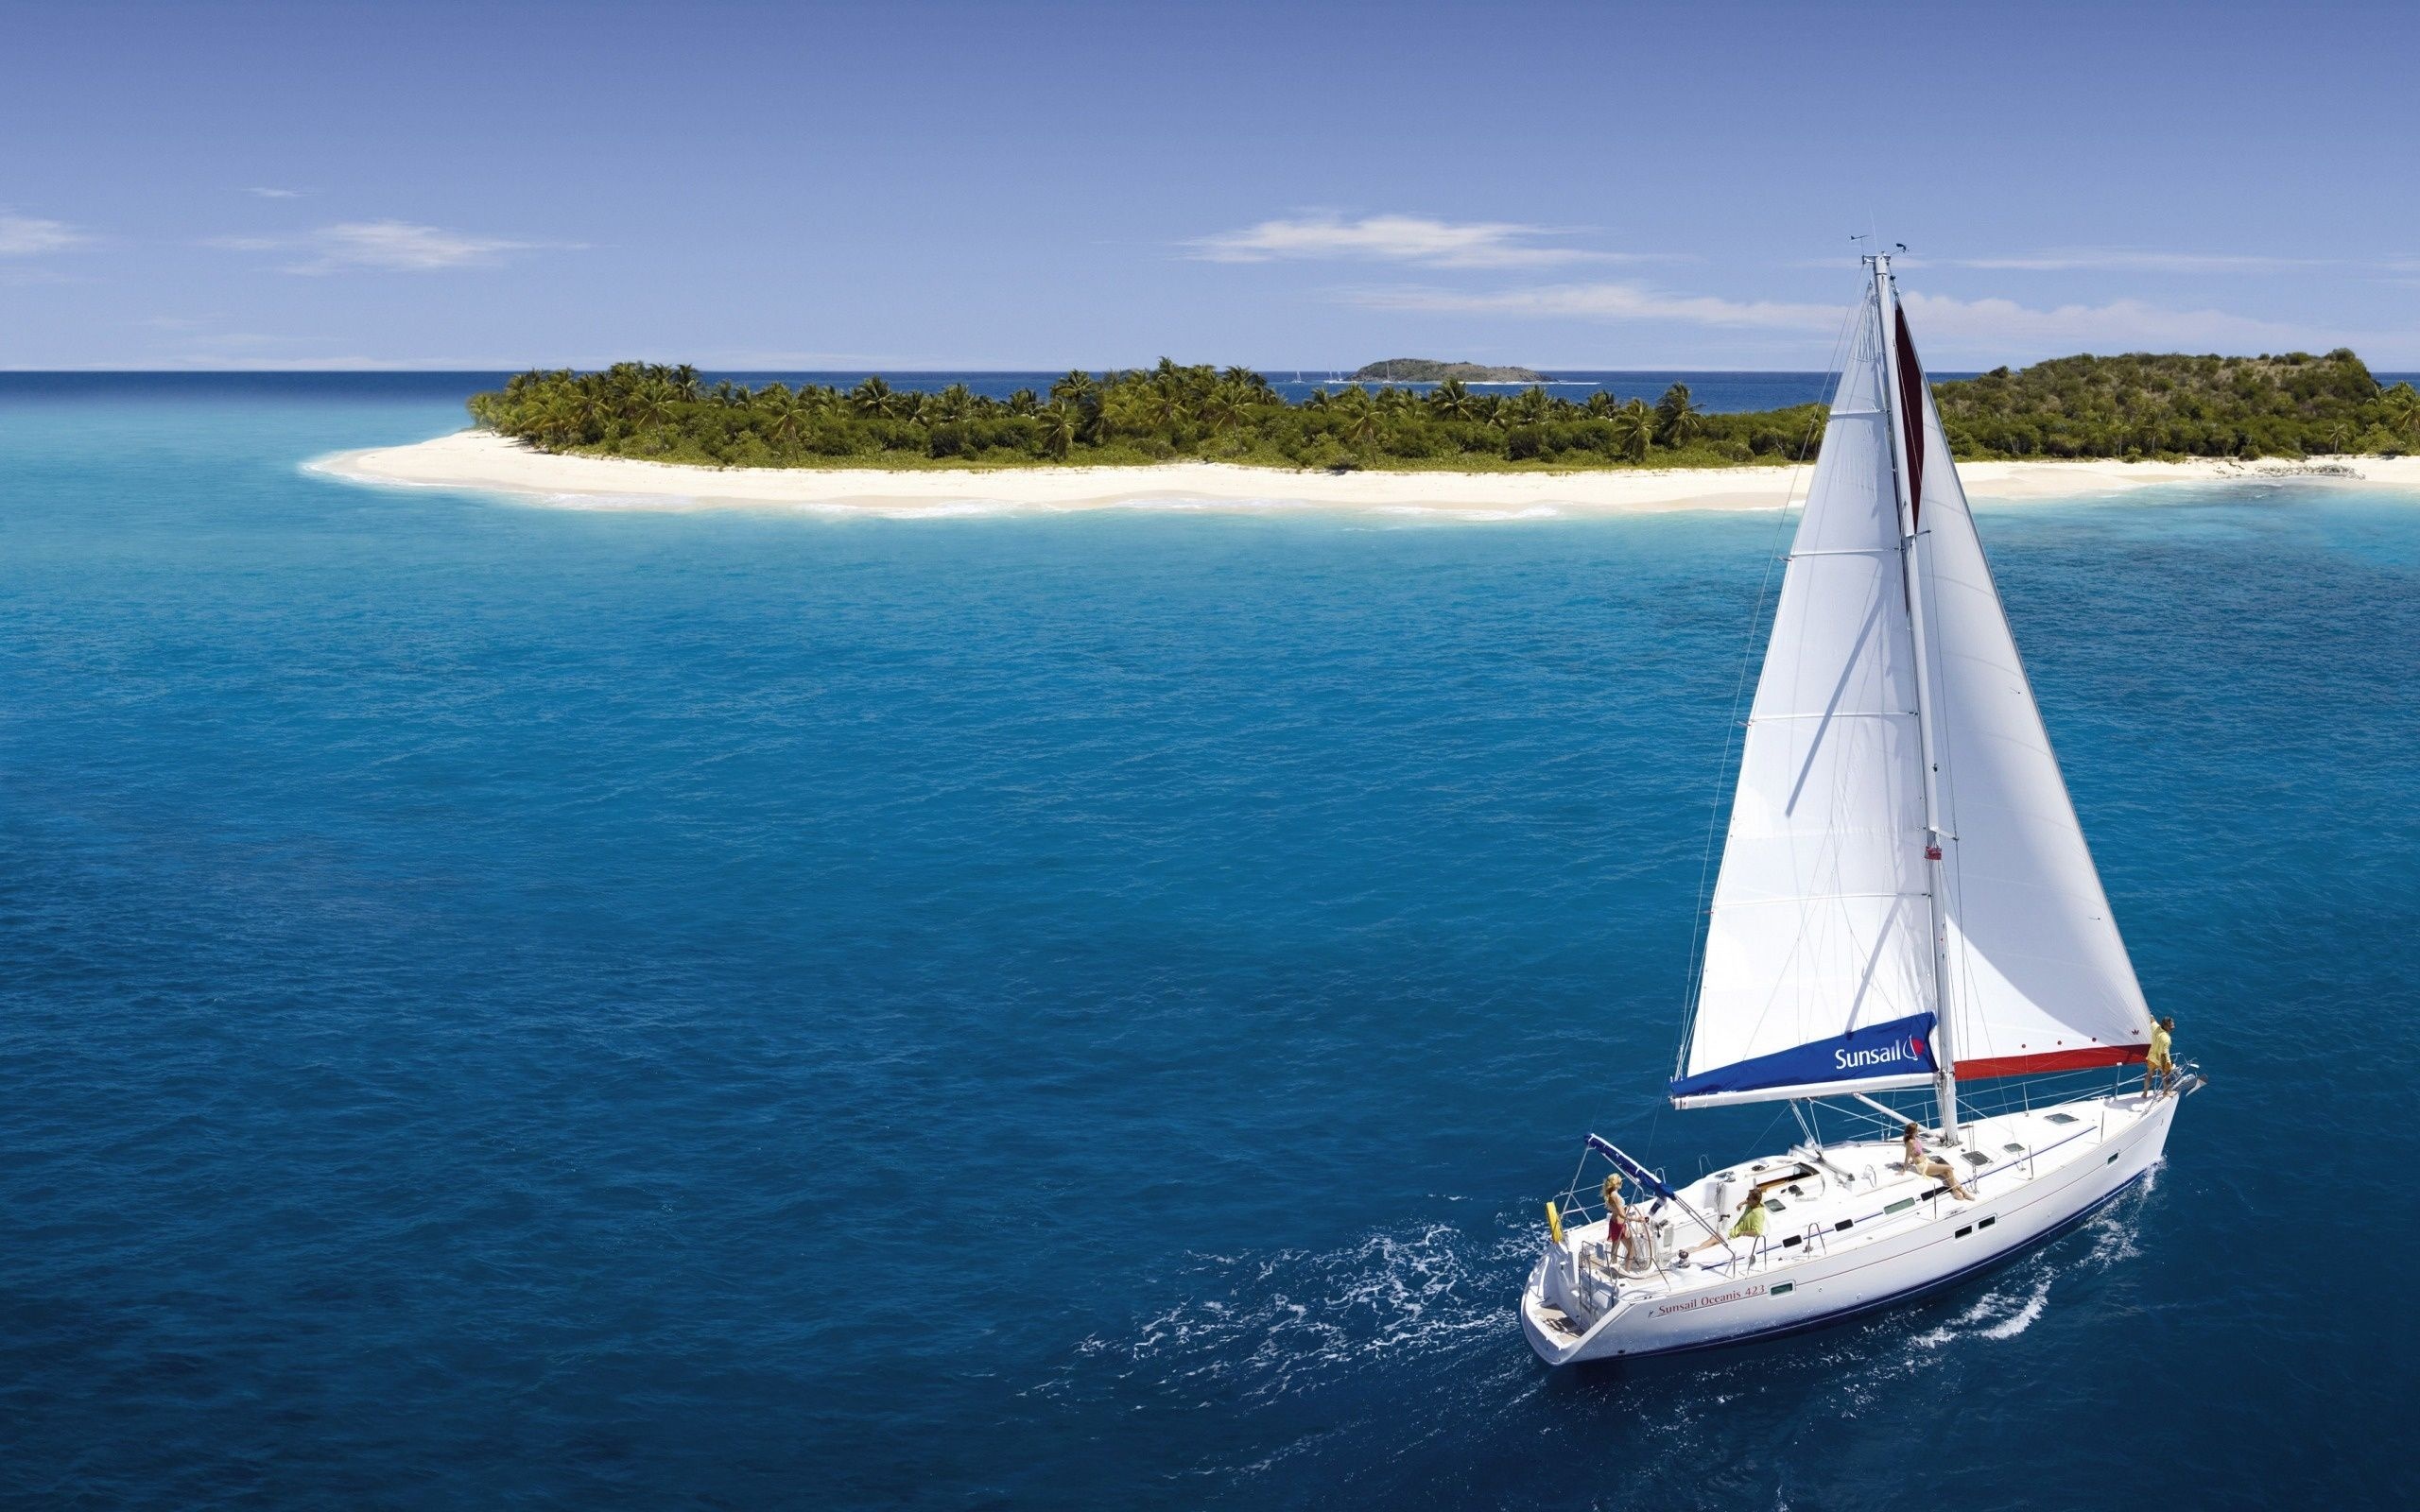 Sailing, Desktop wallpapers, Inspiring backgrounds, Serenity at sea, 2560x1600 HD Desktop